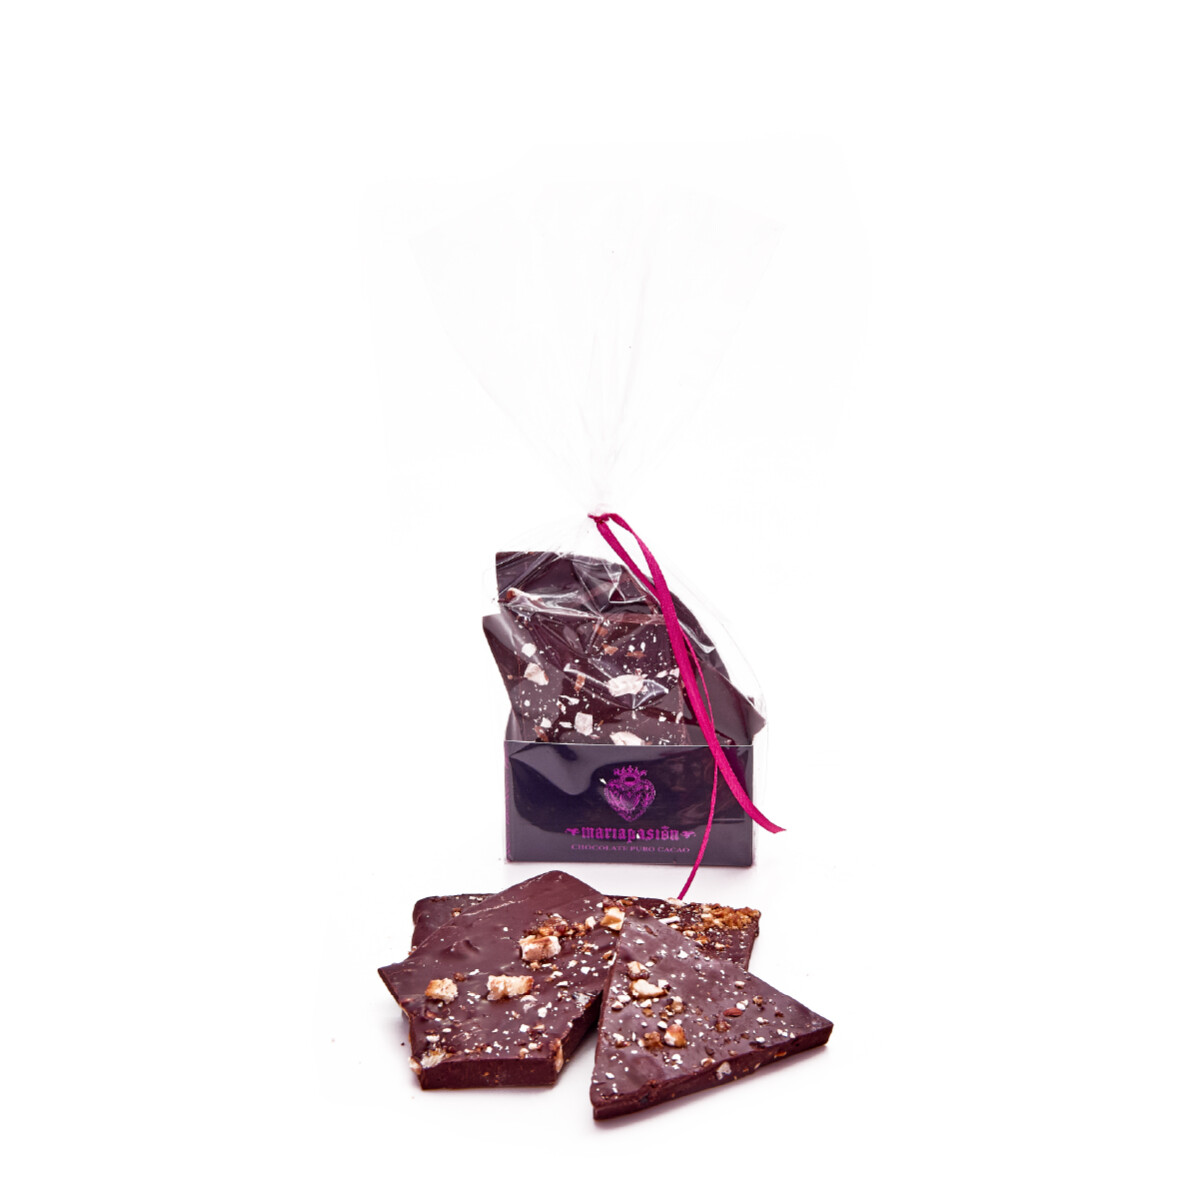 Tartona Pack Chocolate Amargo 58% Puro Cacao. 120grs. SIN AZÚCAR 